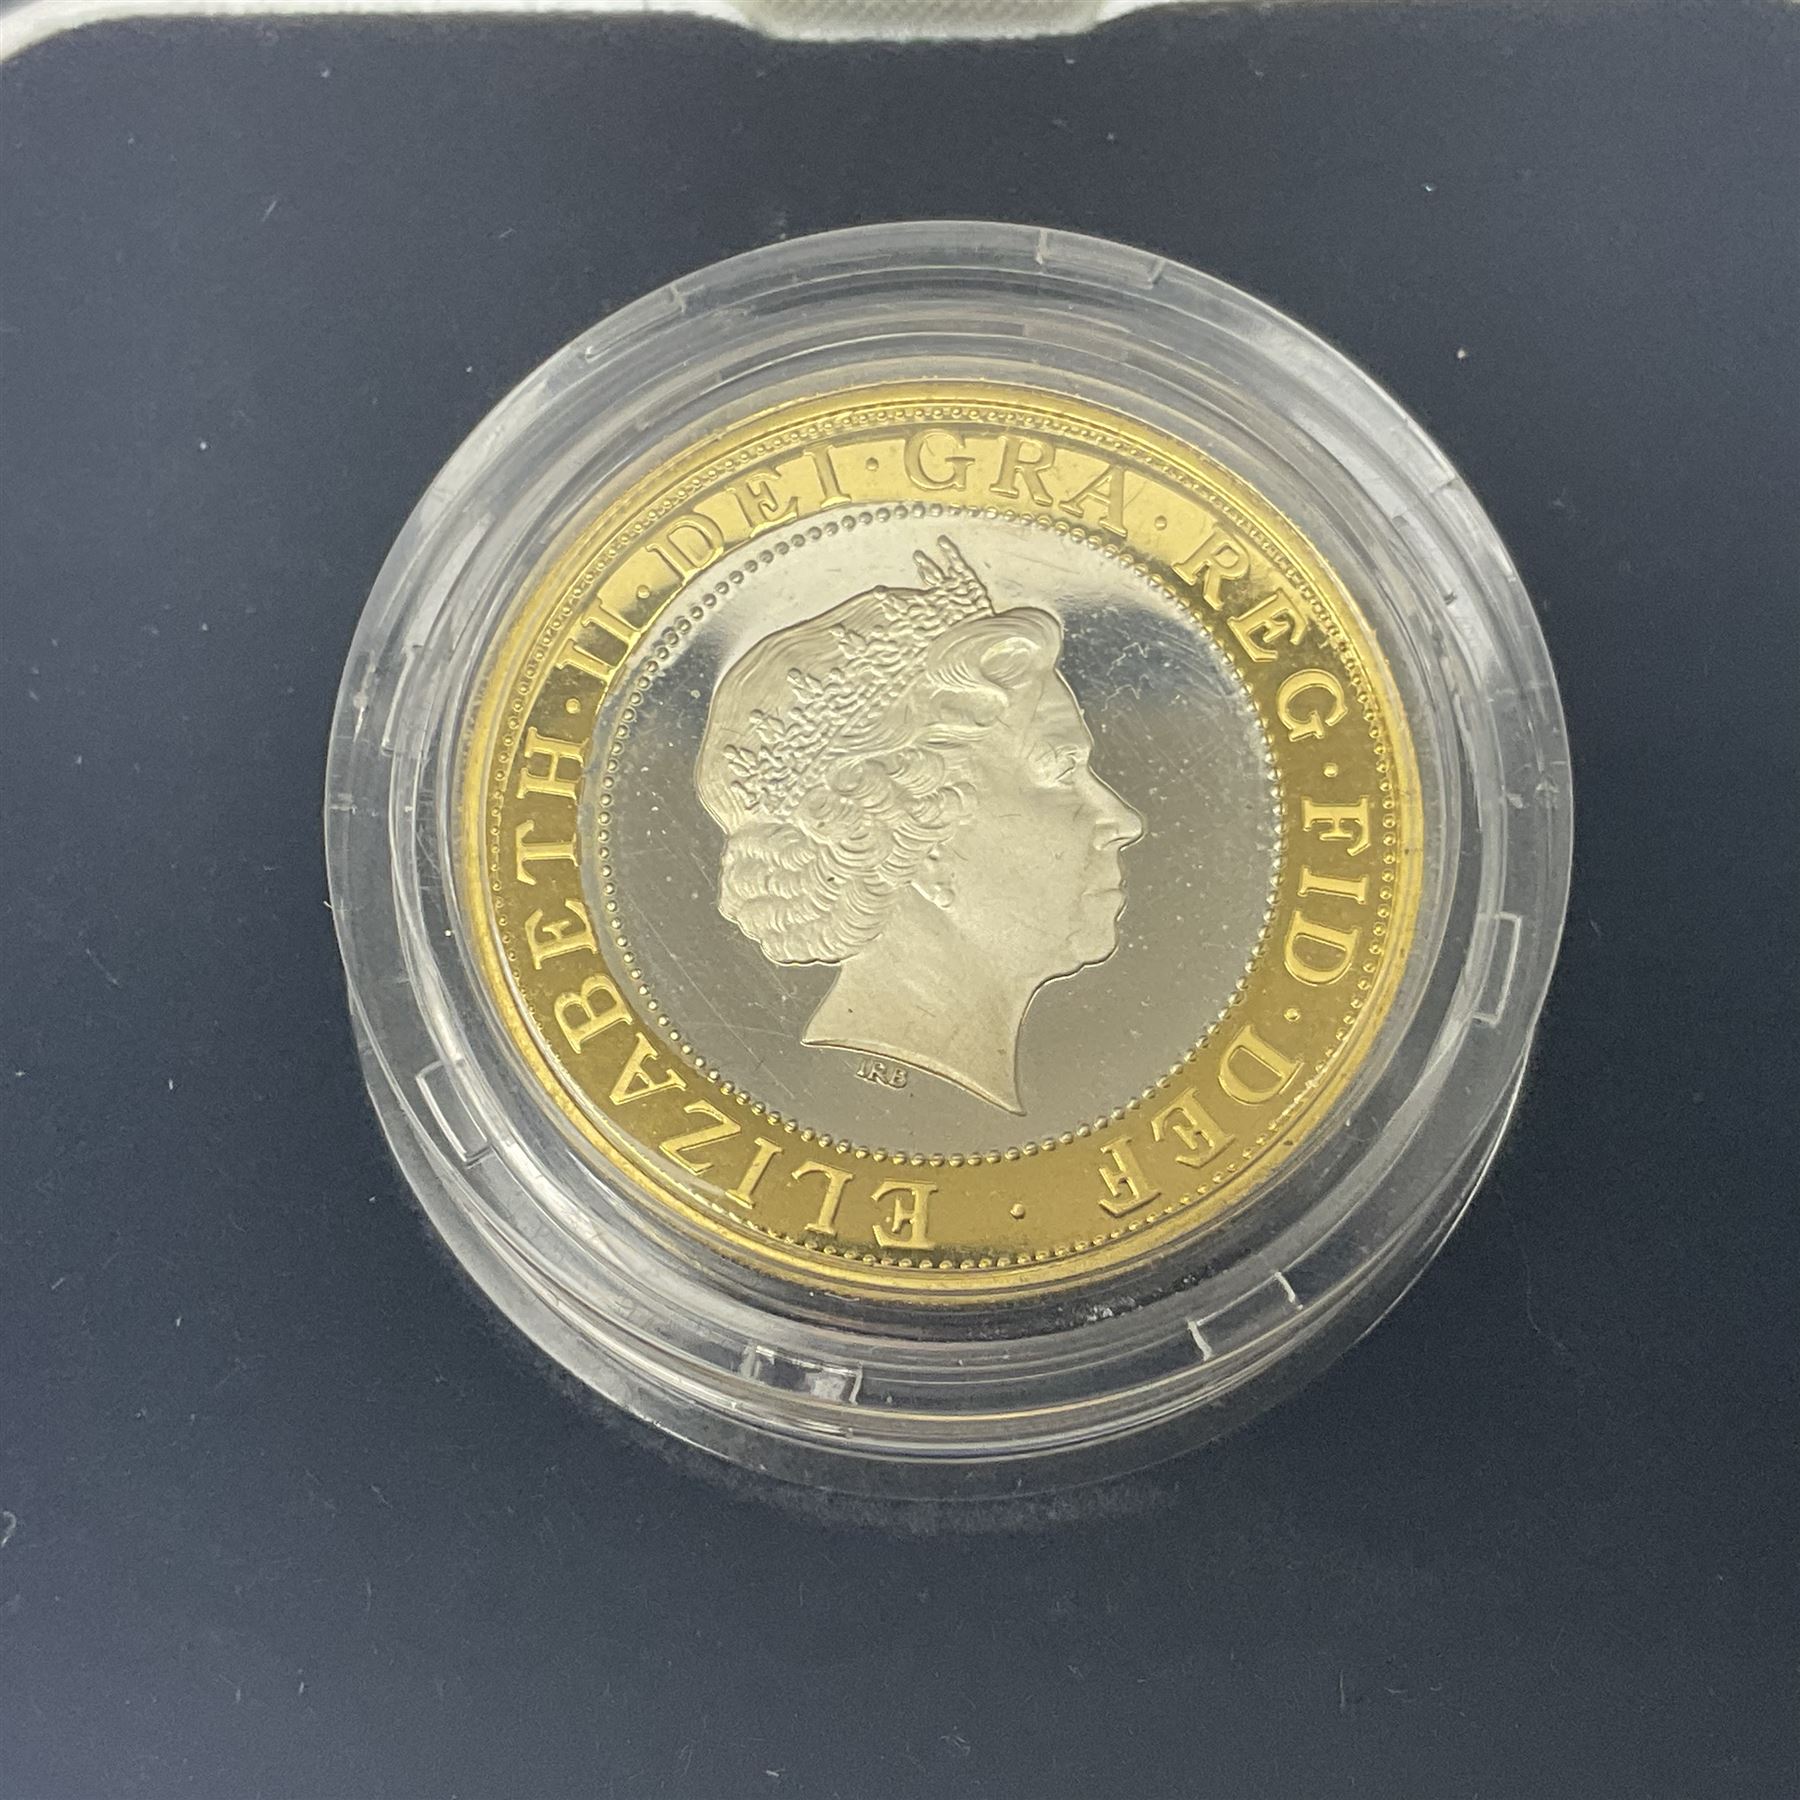 The Royal Mint United Kingdom 2005 ''400th Anniversary of the Gunpowder Plot' silver proof piedfort - Image 3 of 6